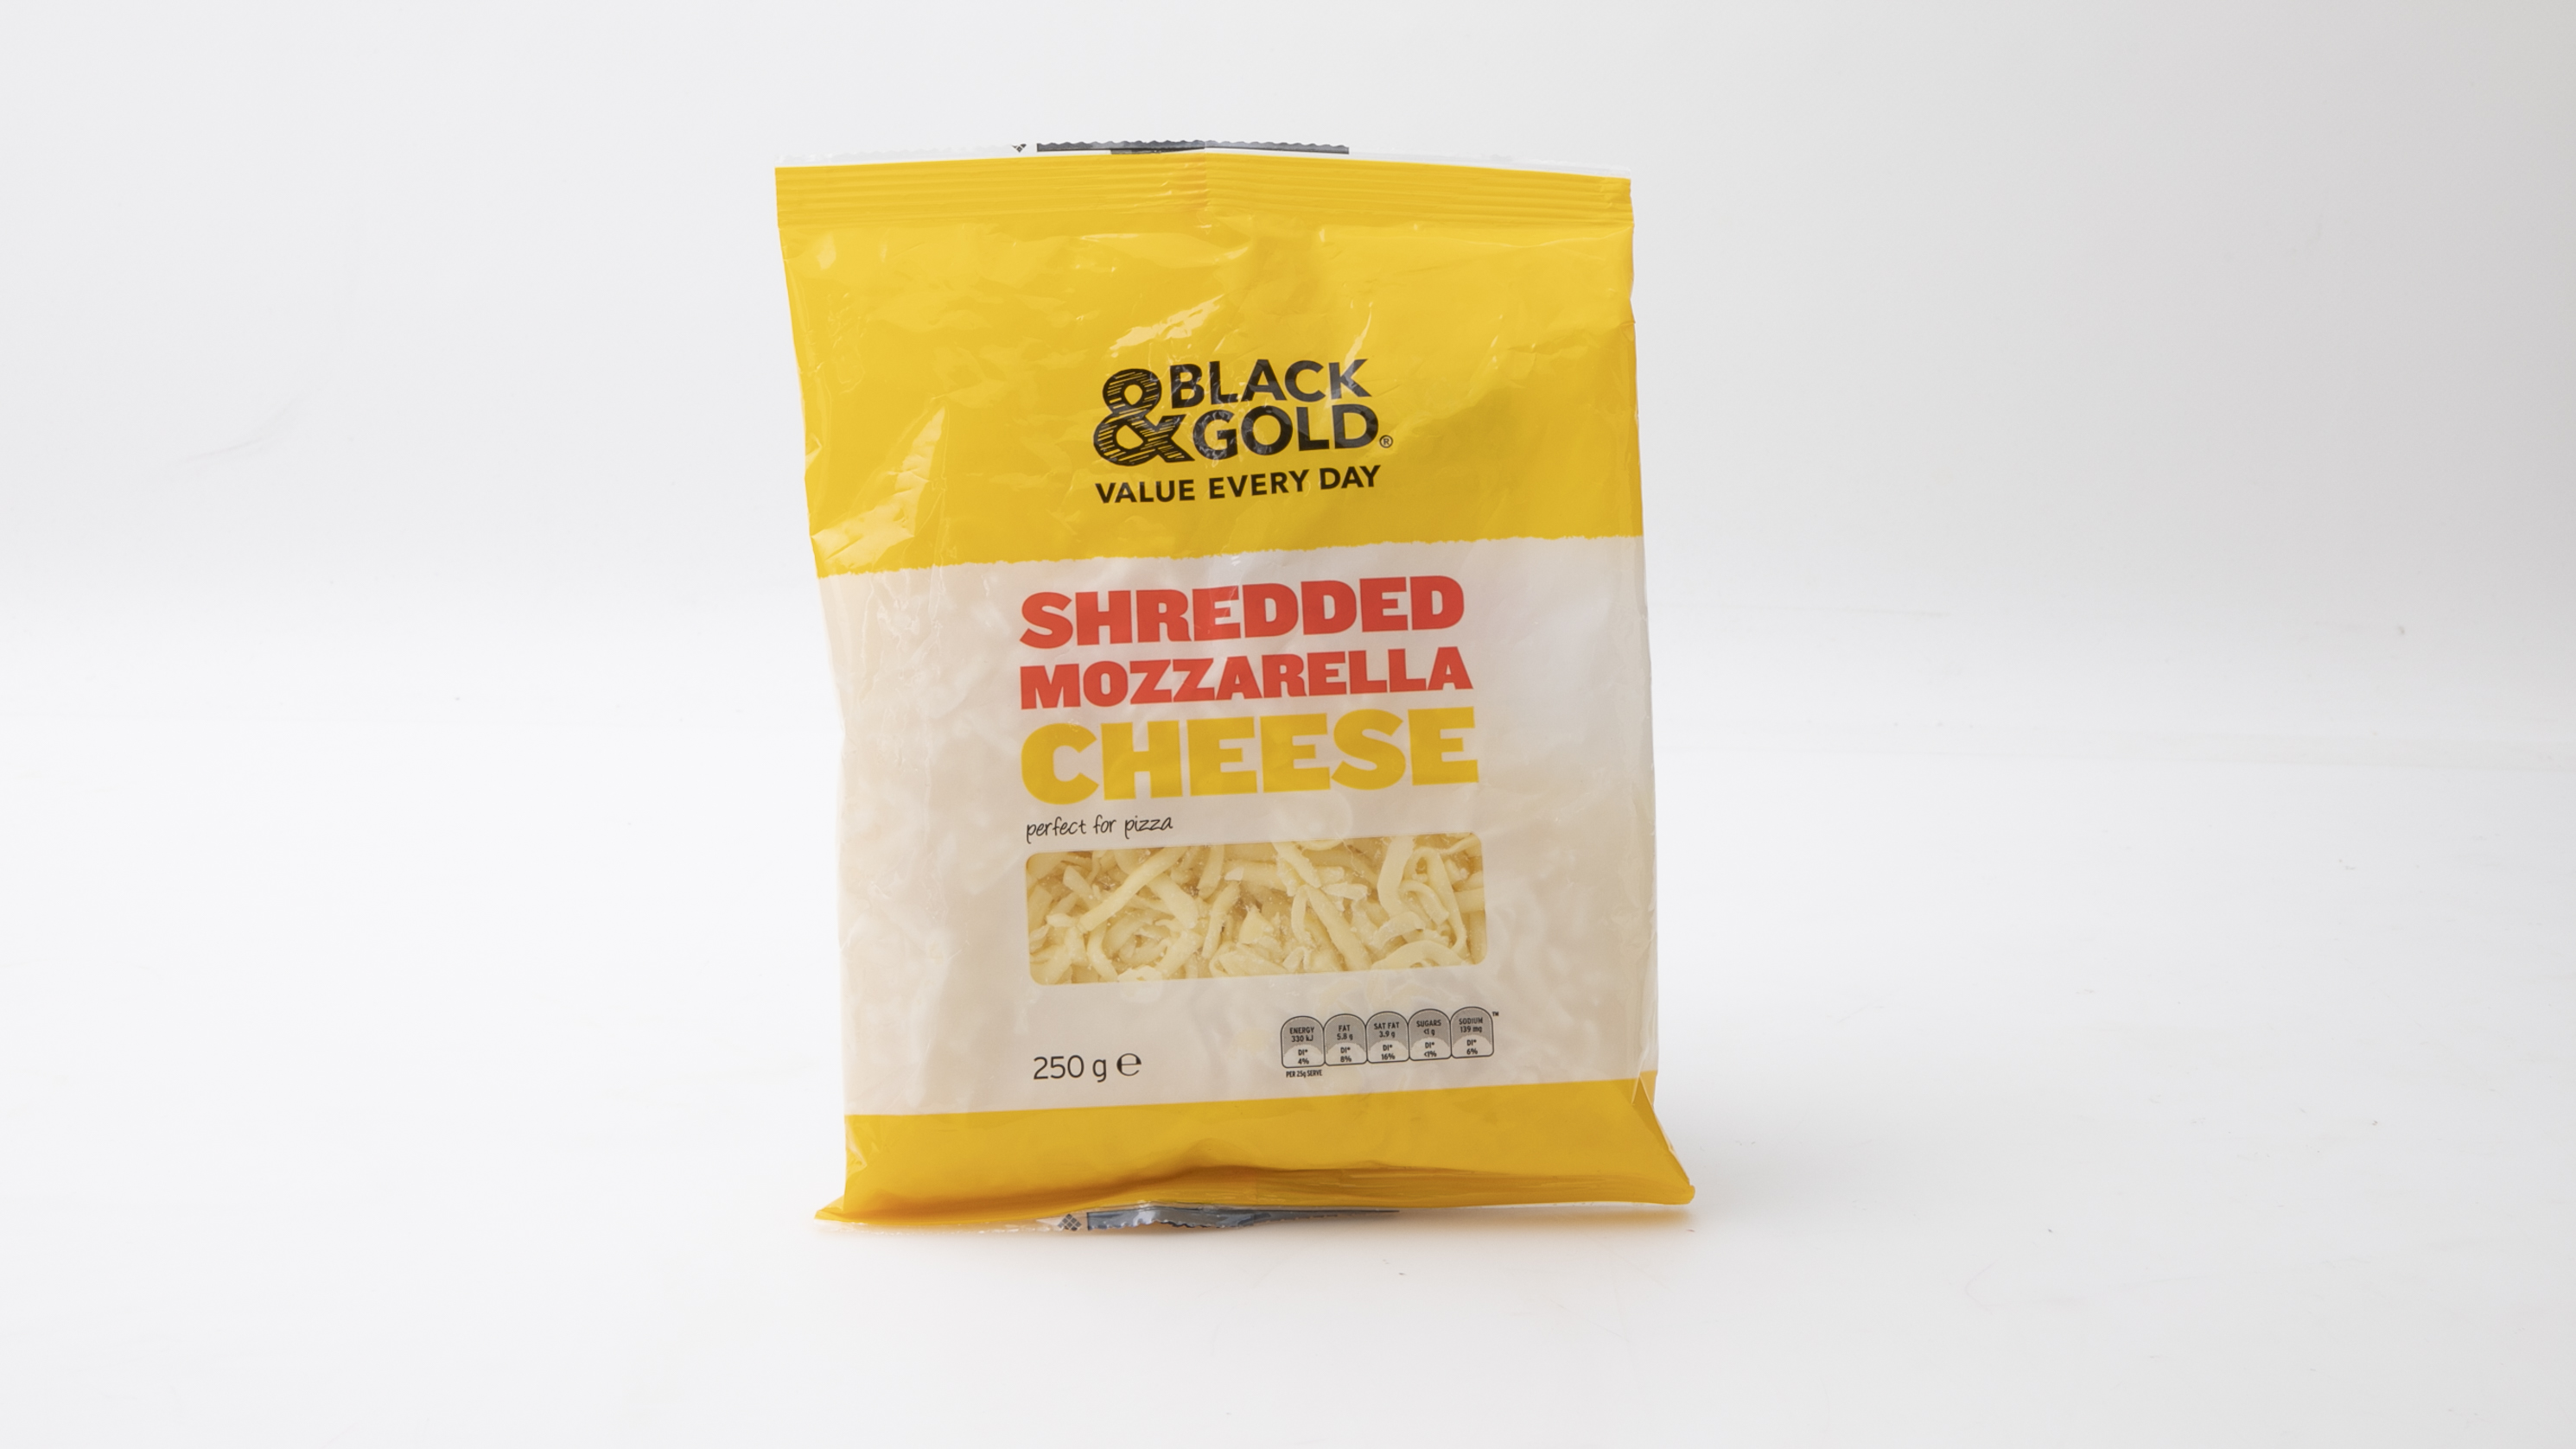 Black & Gold Shredded Mozzarella Cheese carousel image